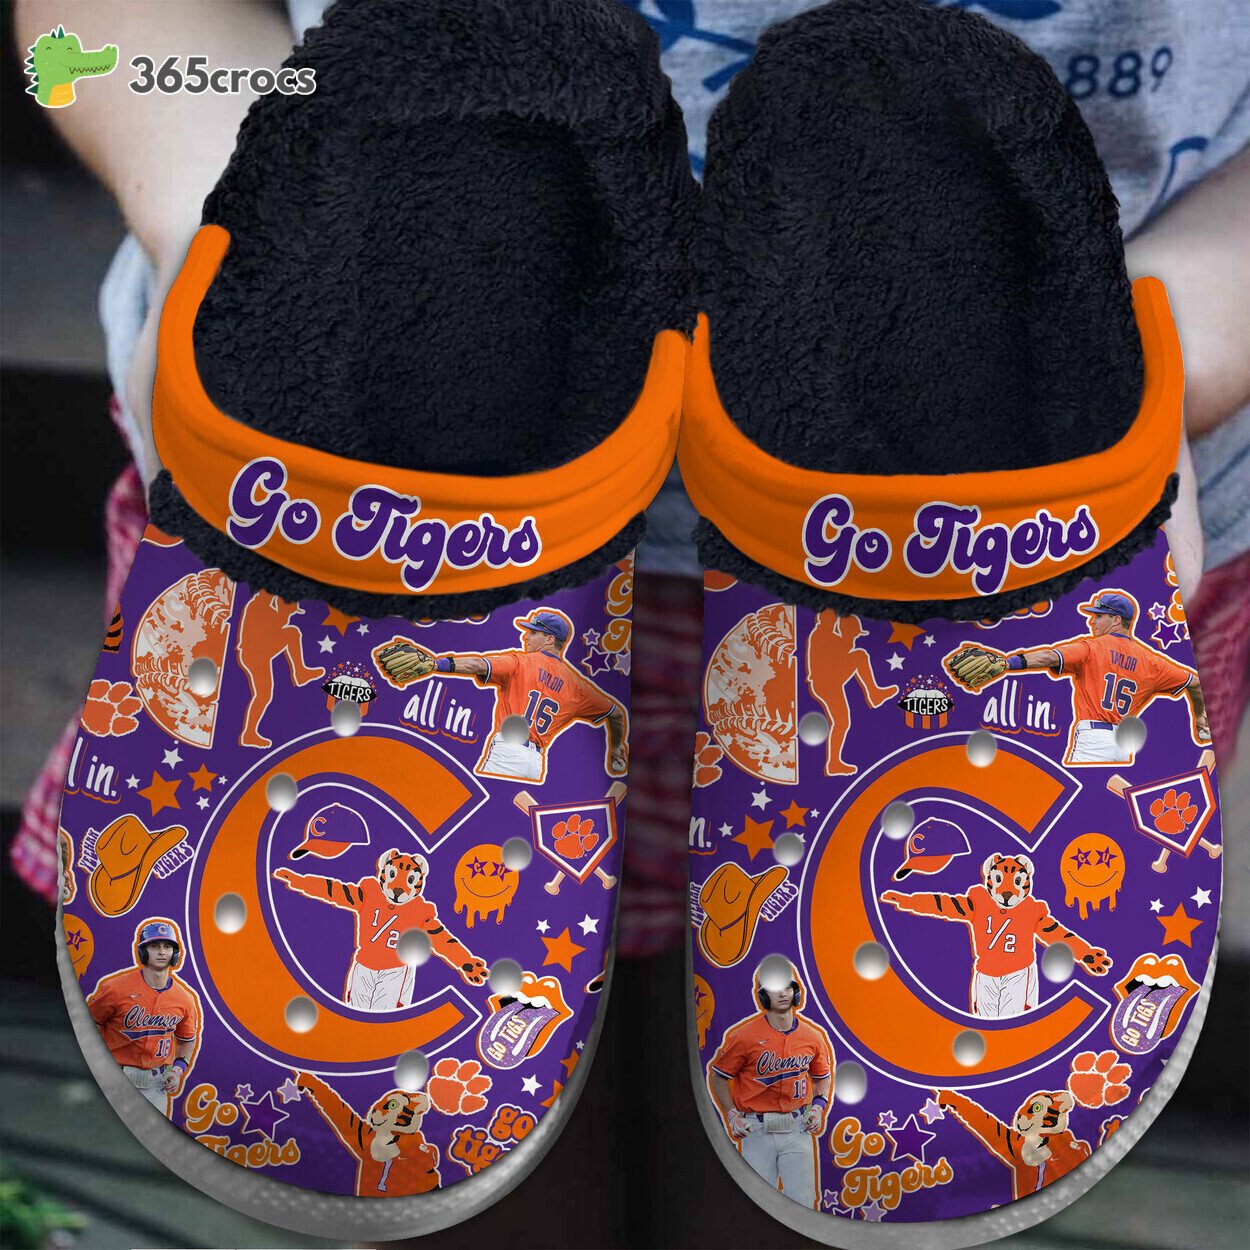 Clemson Tigers NCAA Premium Sport Comfortable Fur Lined Crocss Shoes